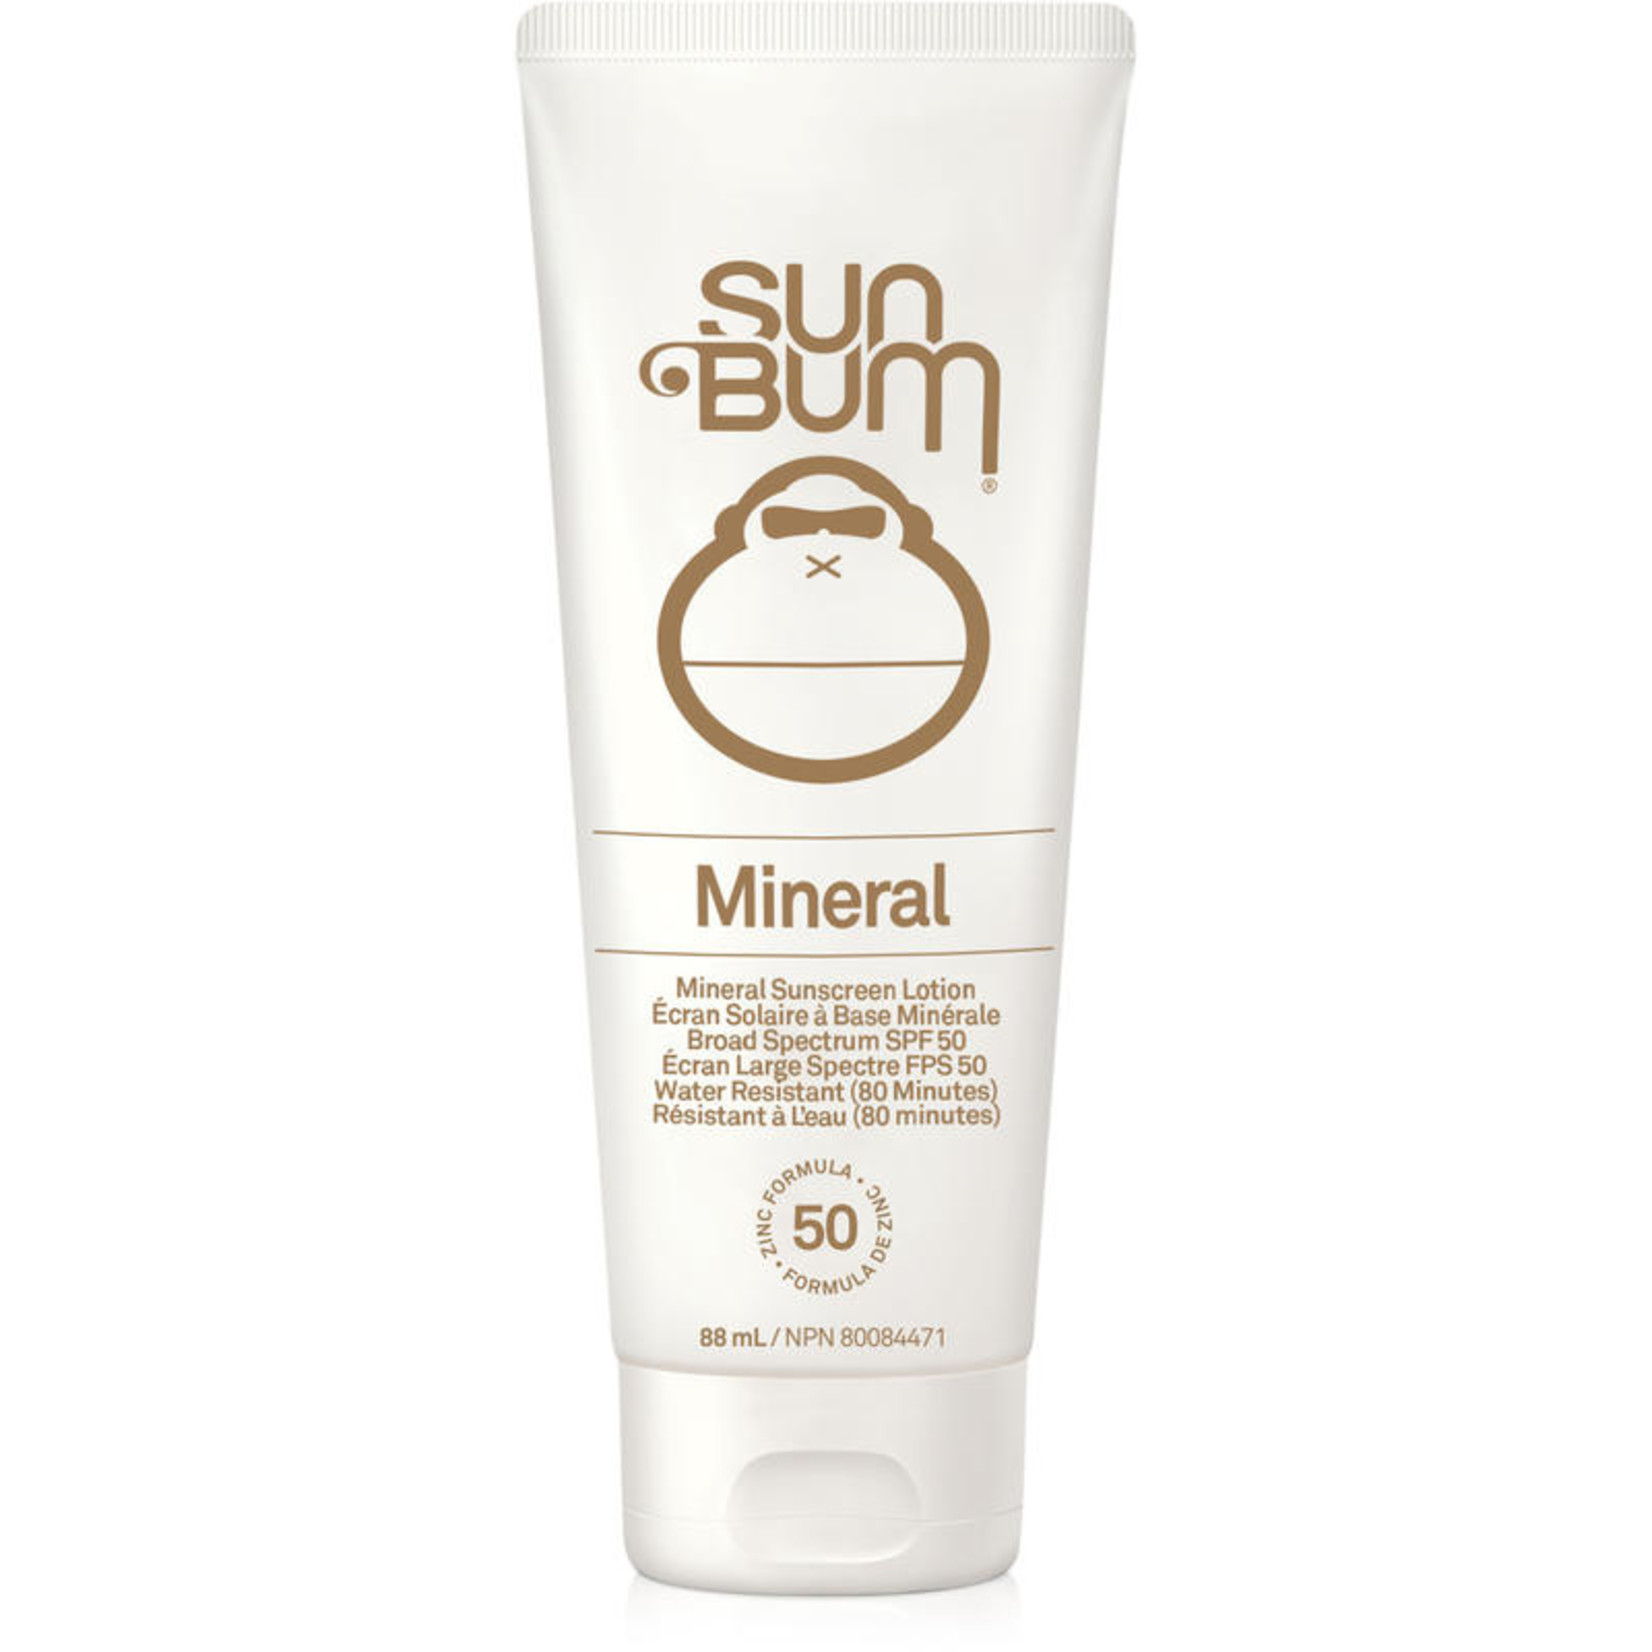 SUN BUM Mineral Sunscreen Lotion SPF 50